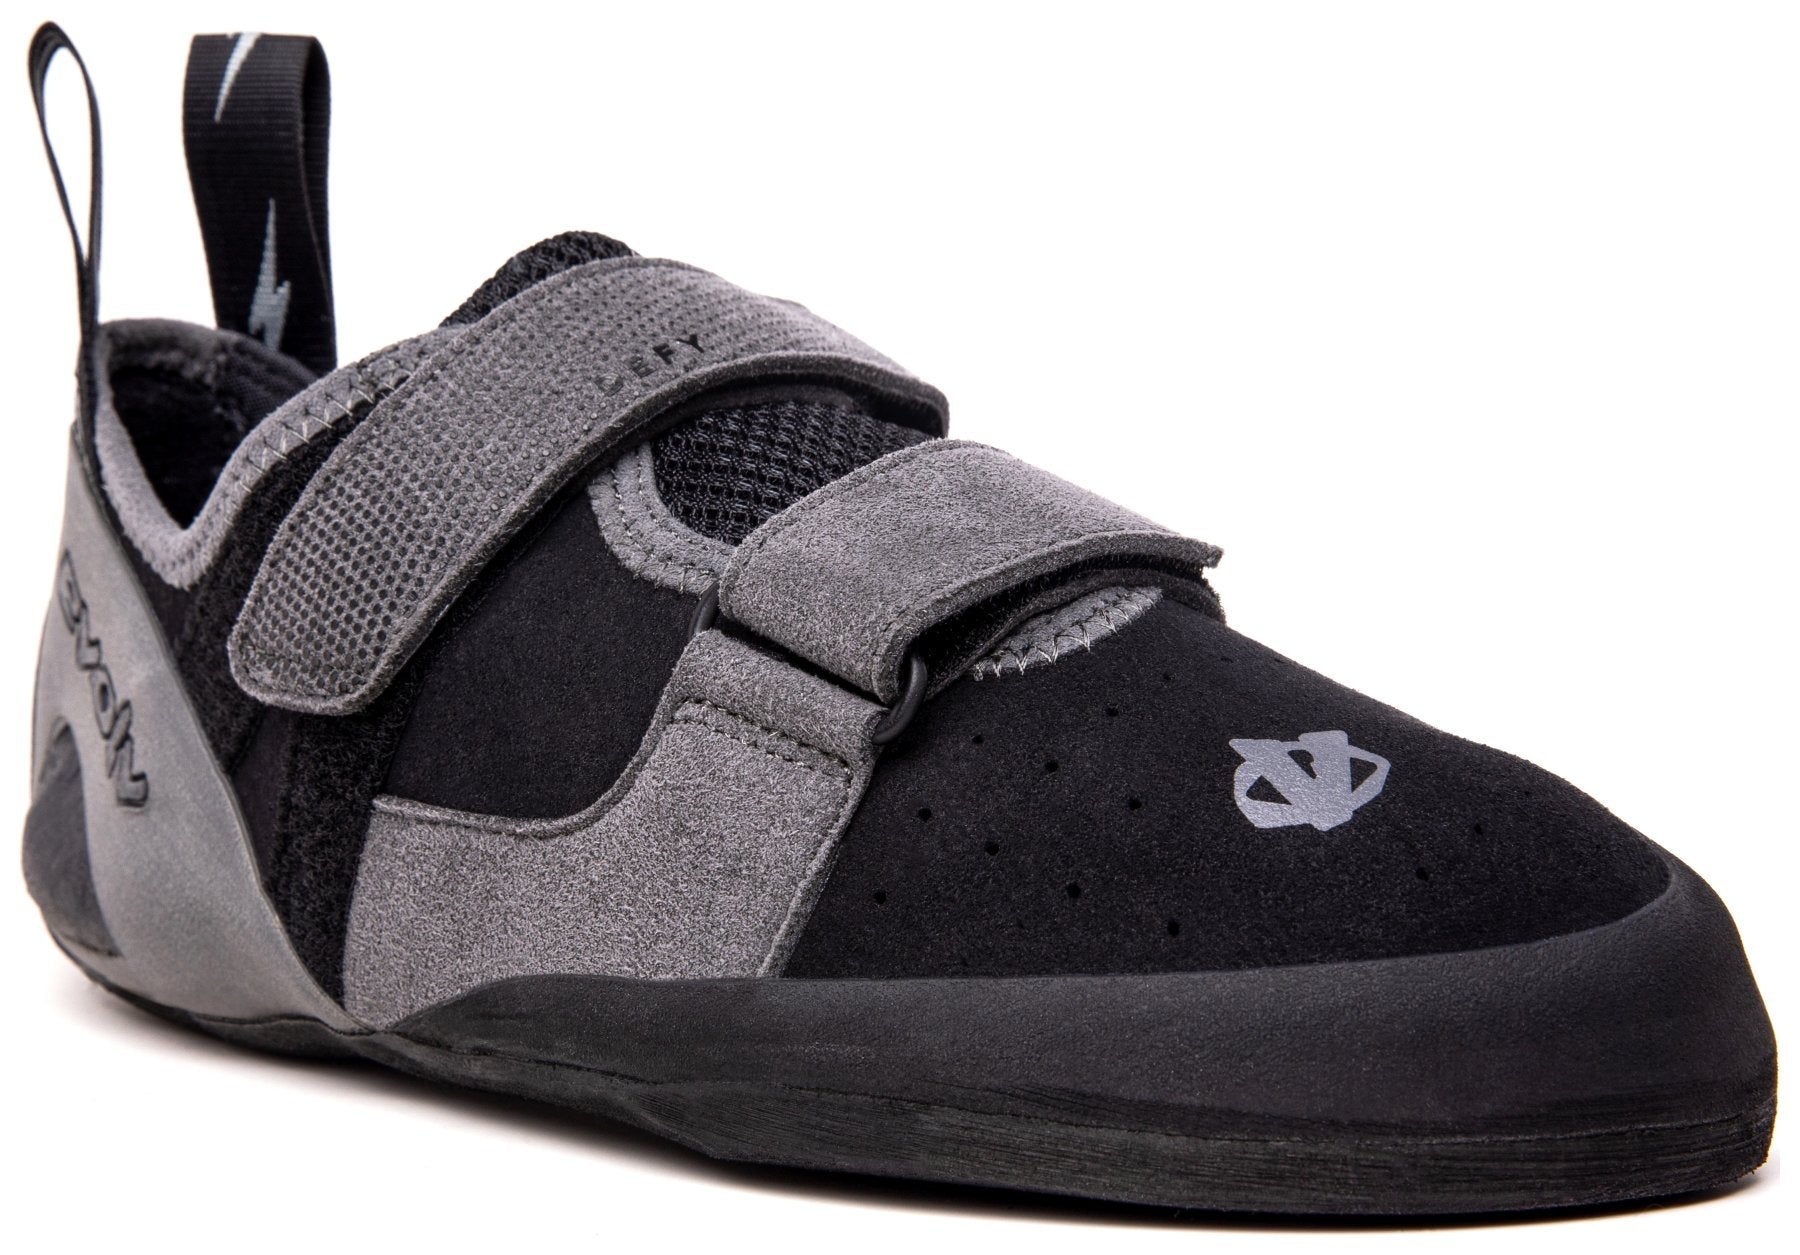 Defy - grey-black, men's climbing shoes